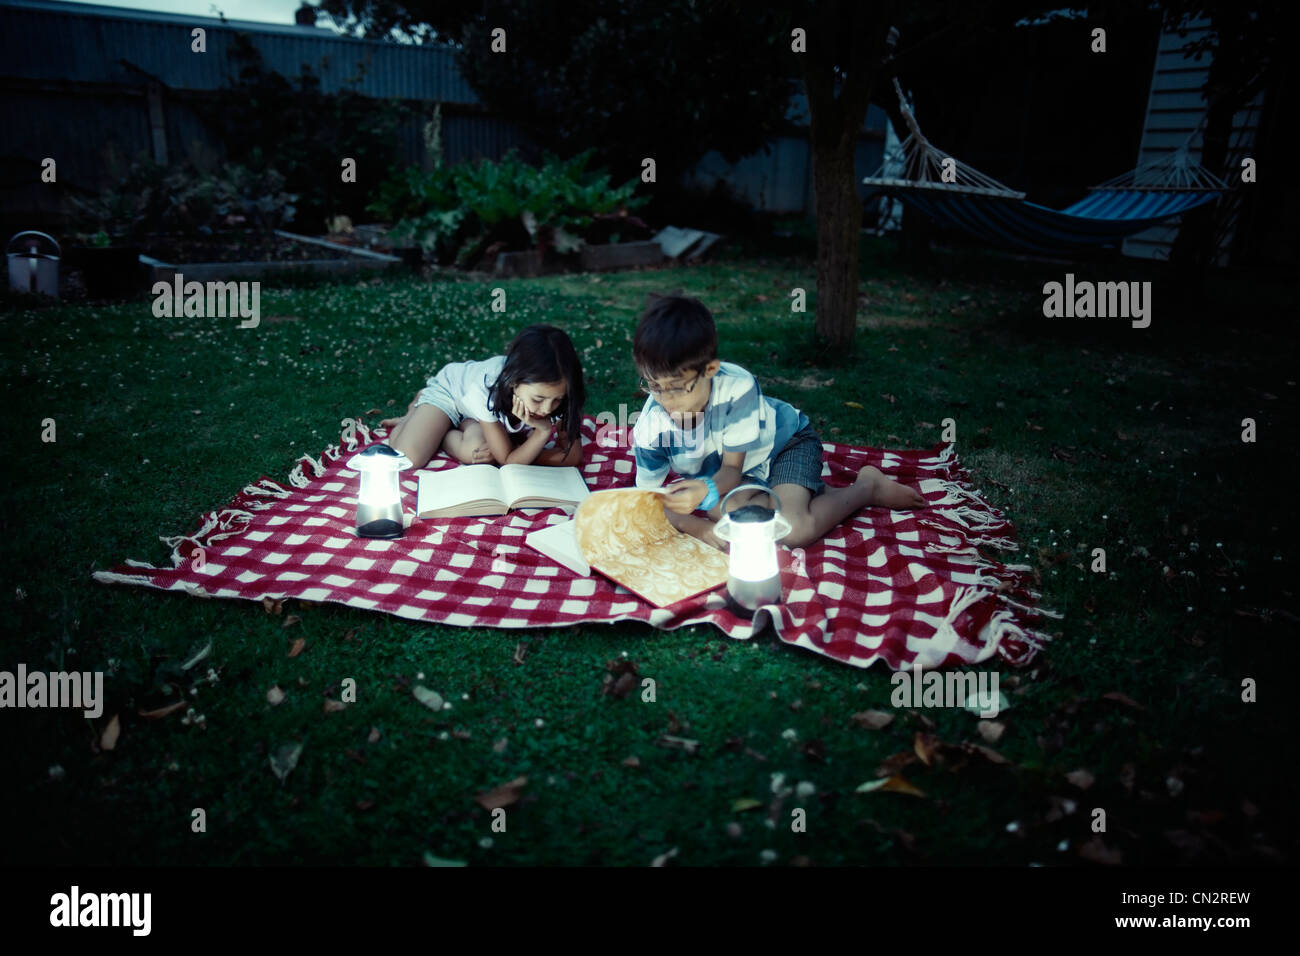 Children read books by lantern light on blanket in garden in evening. Stock Photo